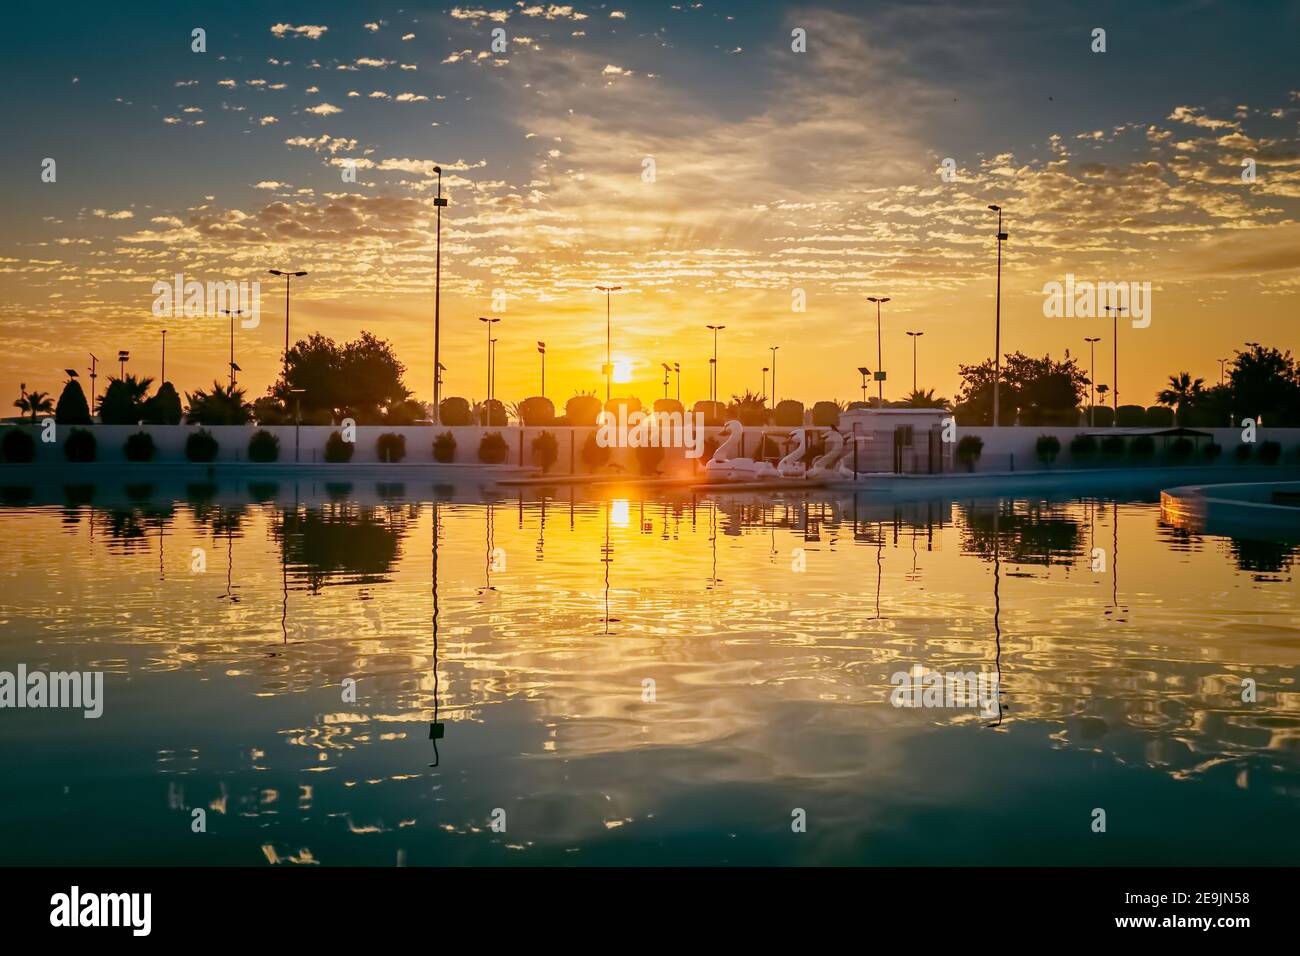 Beautiful sunset view in King fahad park Dammam Saudi Arabia. Selective focus background blurred. Stock Photo